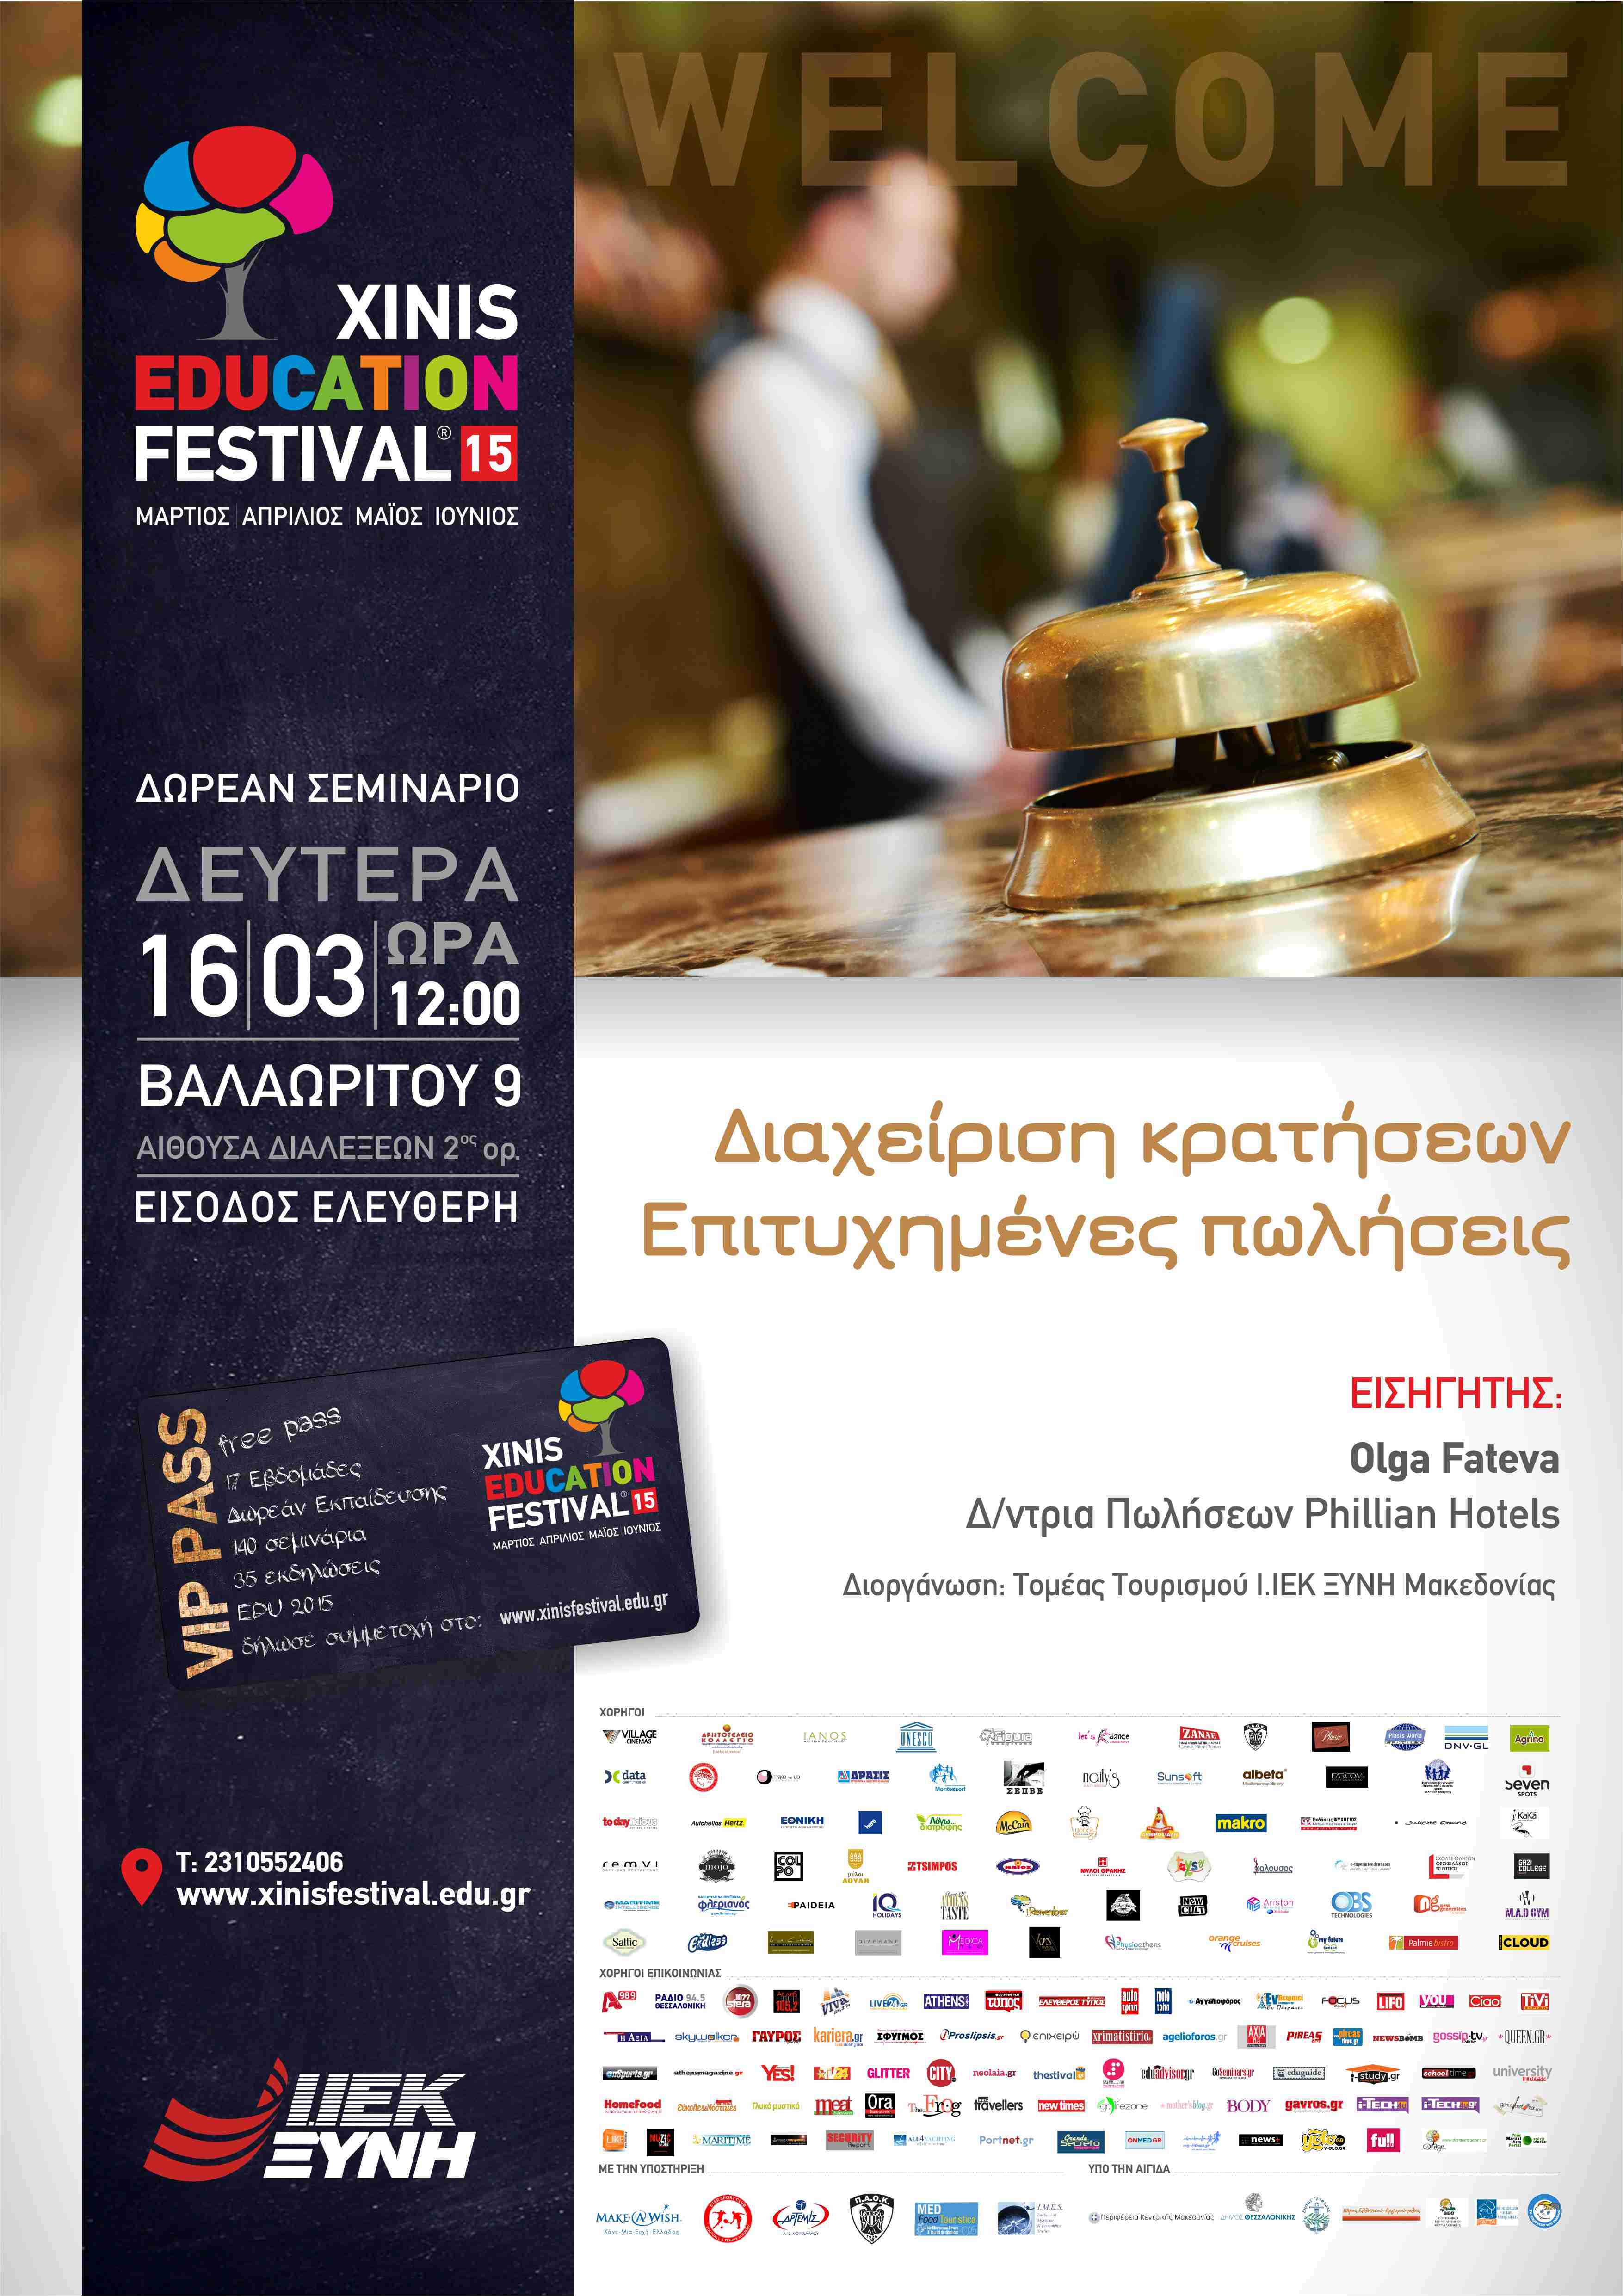 Xinis Education Festival 2015: Μια εβδομάδα δωρεάν σεμιναρίων αφιερωμένη στο χρυσάφι της Ελλάδας, τον Τουρισμό από τον Εκπαιδευτικό Όμιλο ΞΥΝΗ Μακεδονίας!